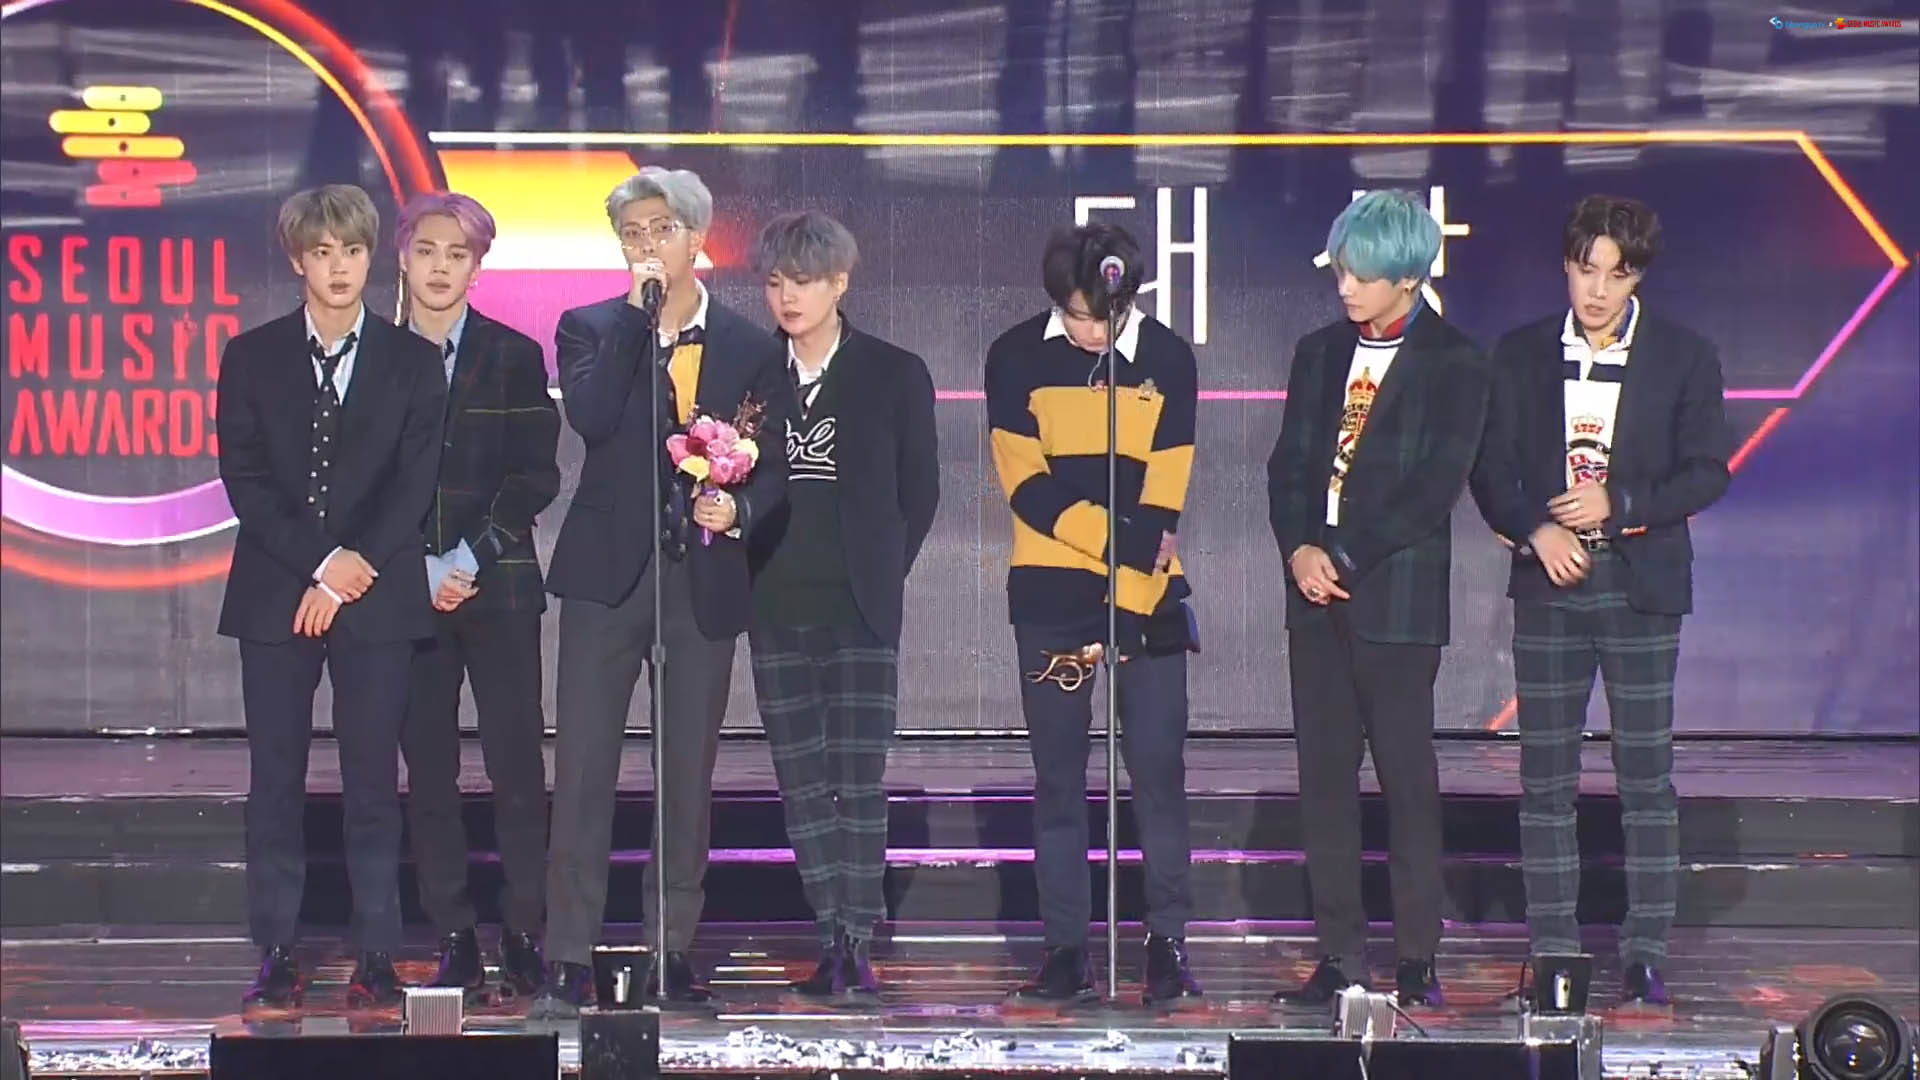 BTS won the Daesang at the 28th Seoul Music Awards 2019